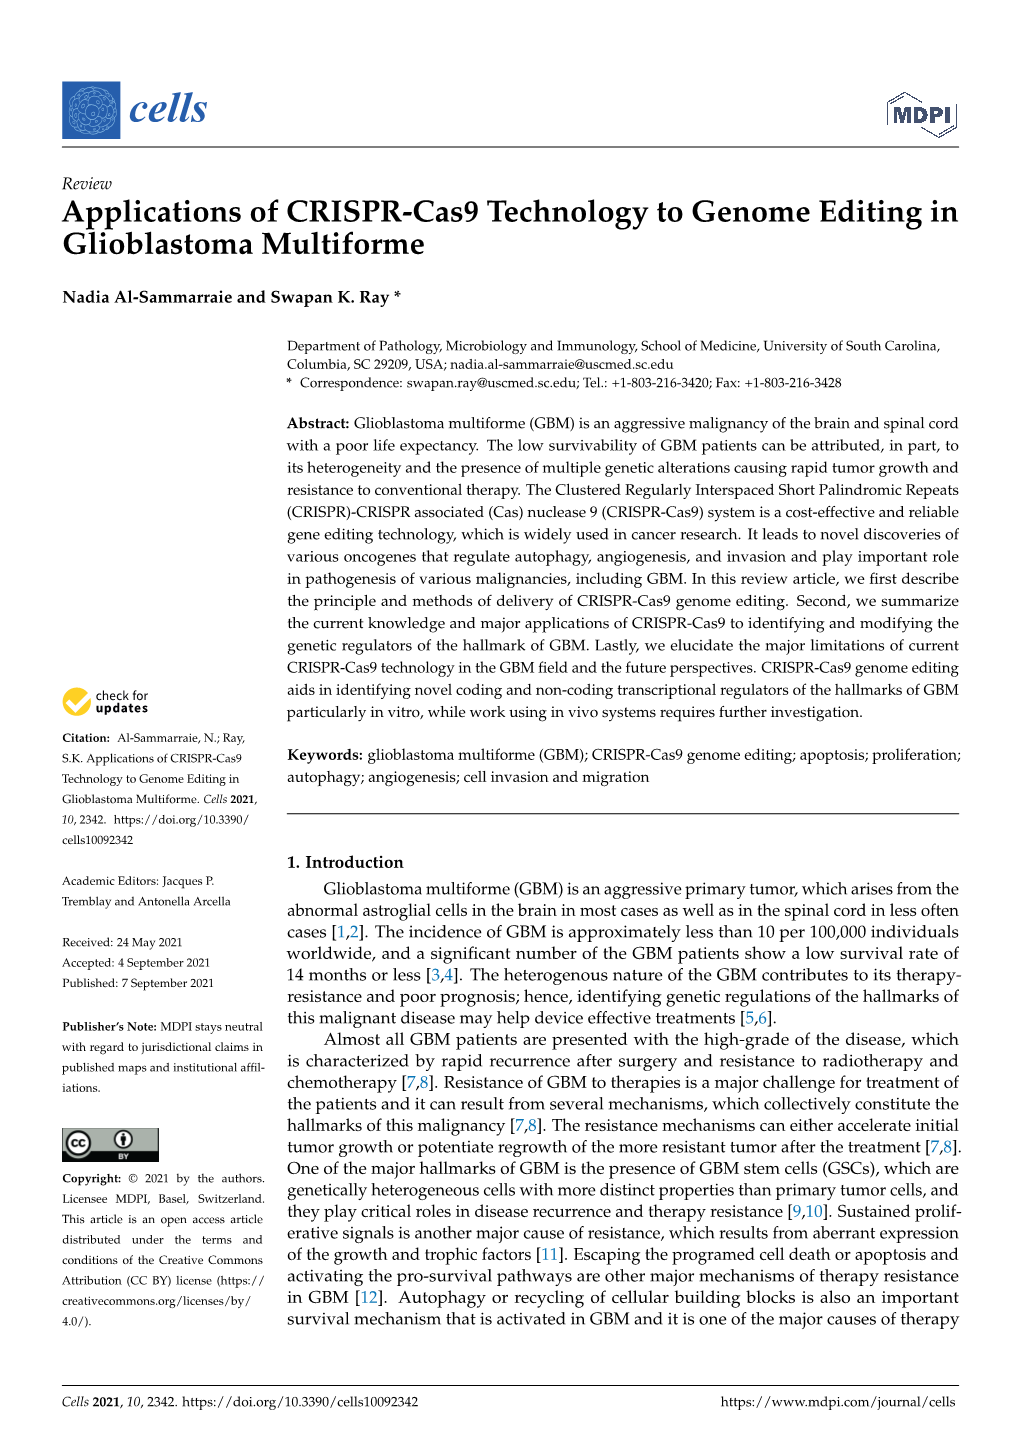 Applications of CRISPR-Cas9 Technology to Genome Editing in Glioblastoma Multiforme